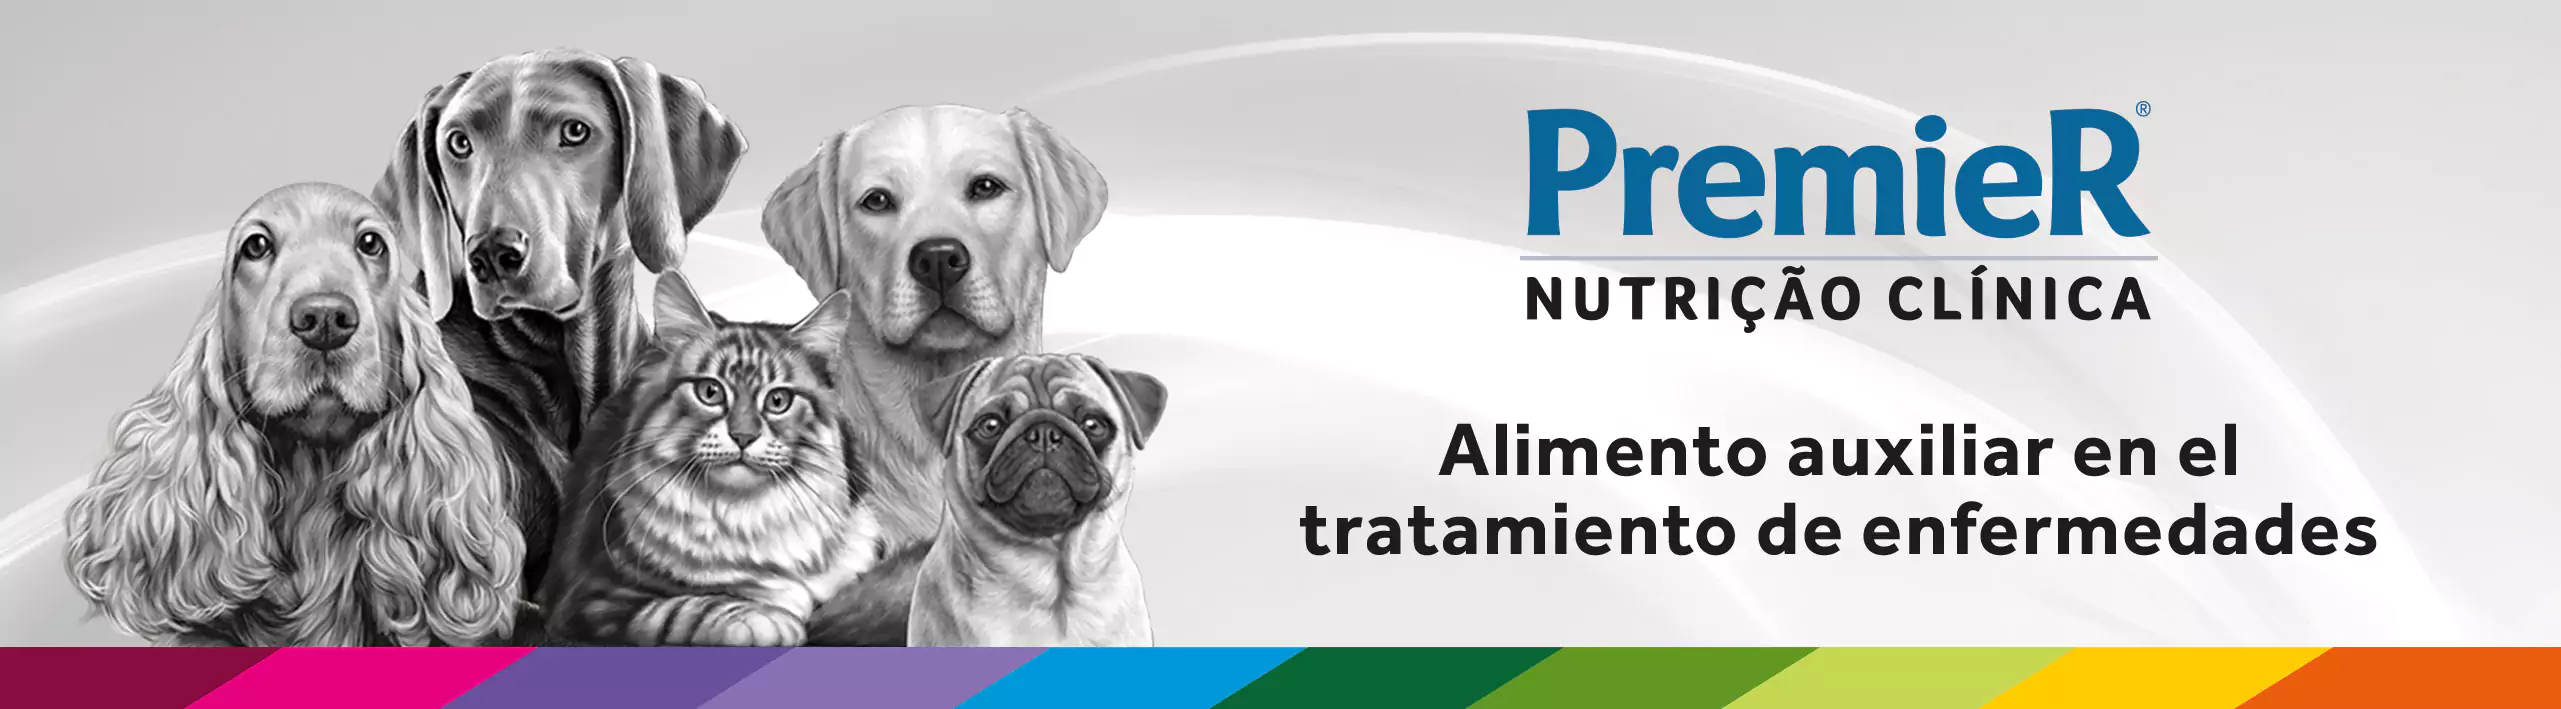 Banner | Premier Nutrición Clinica